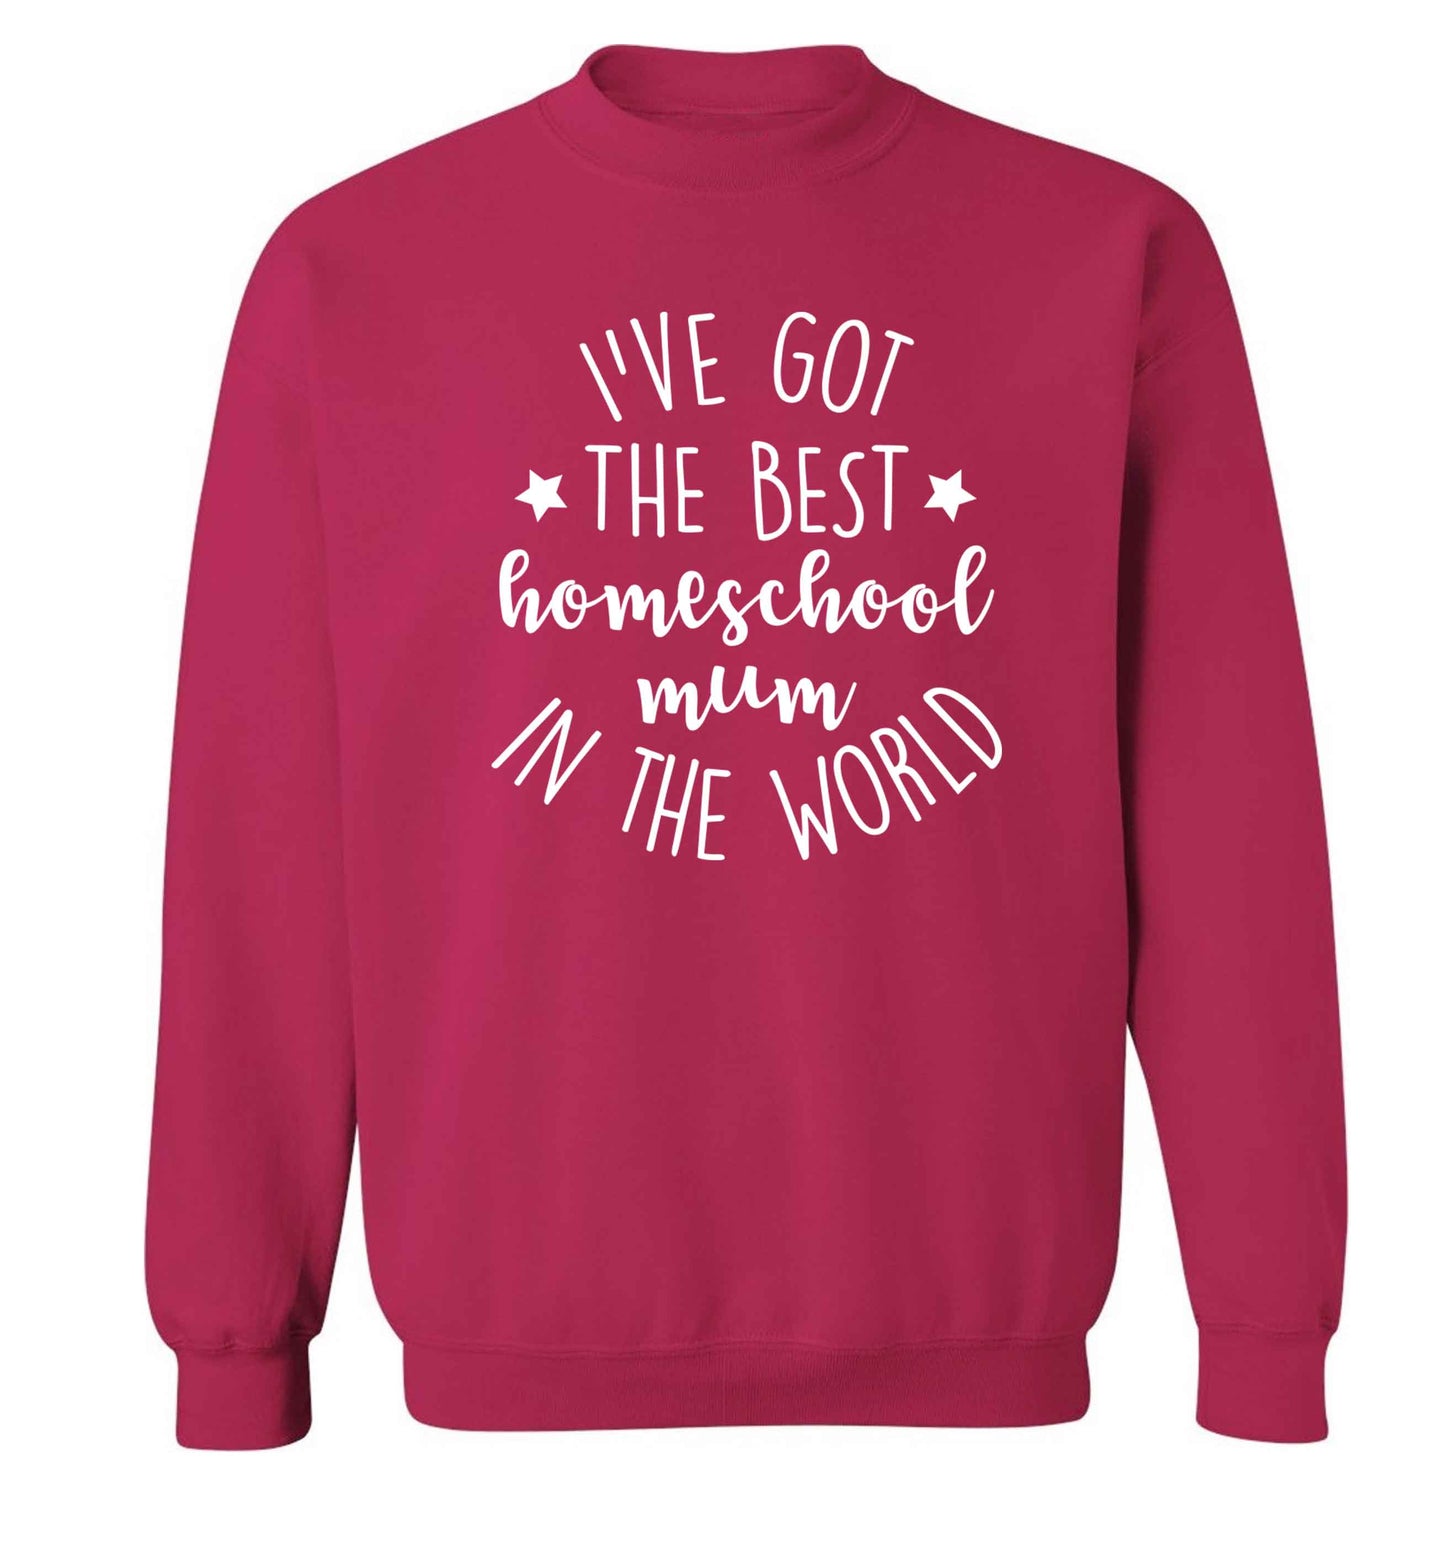 I've got the best homeschool mum in the world Adult's unisex pink Sweater 2XL